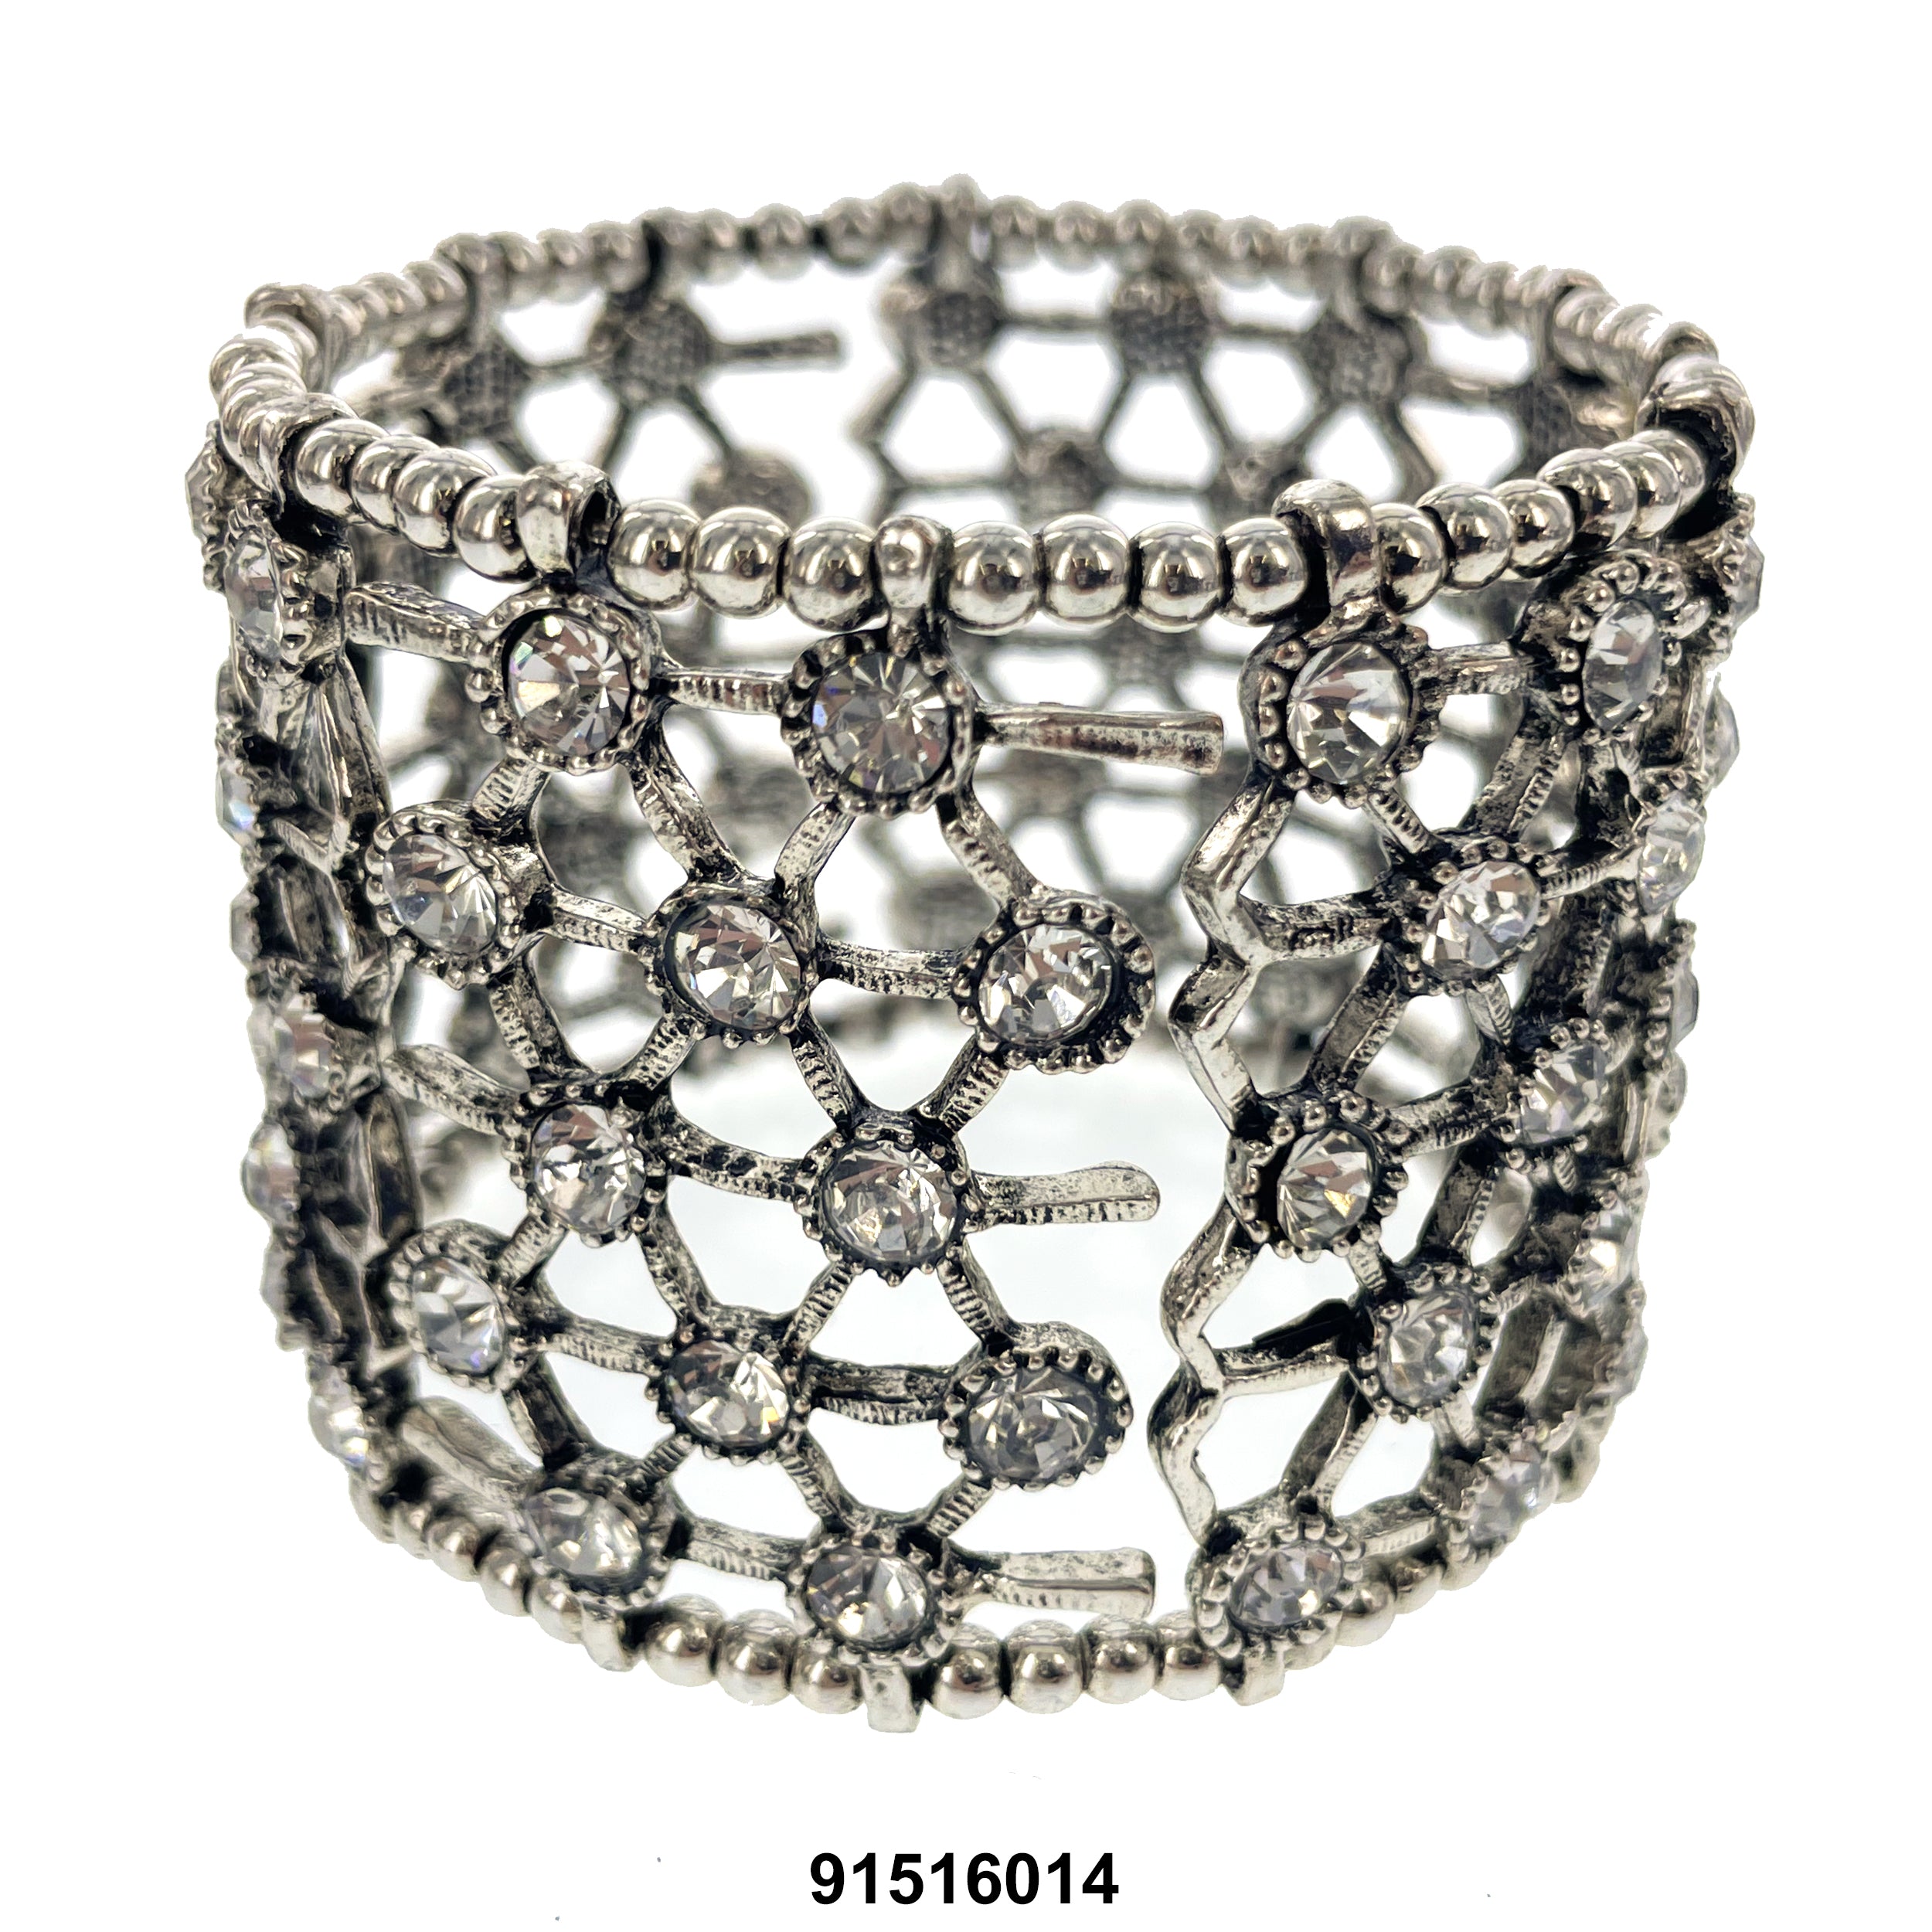 Spider Cuff Bangle Bracelet 91516014